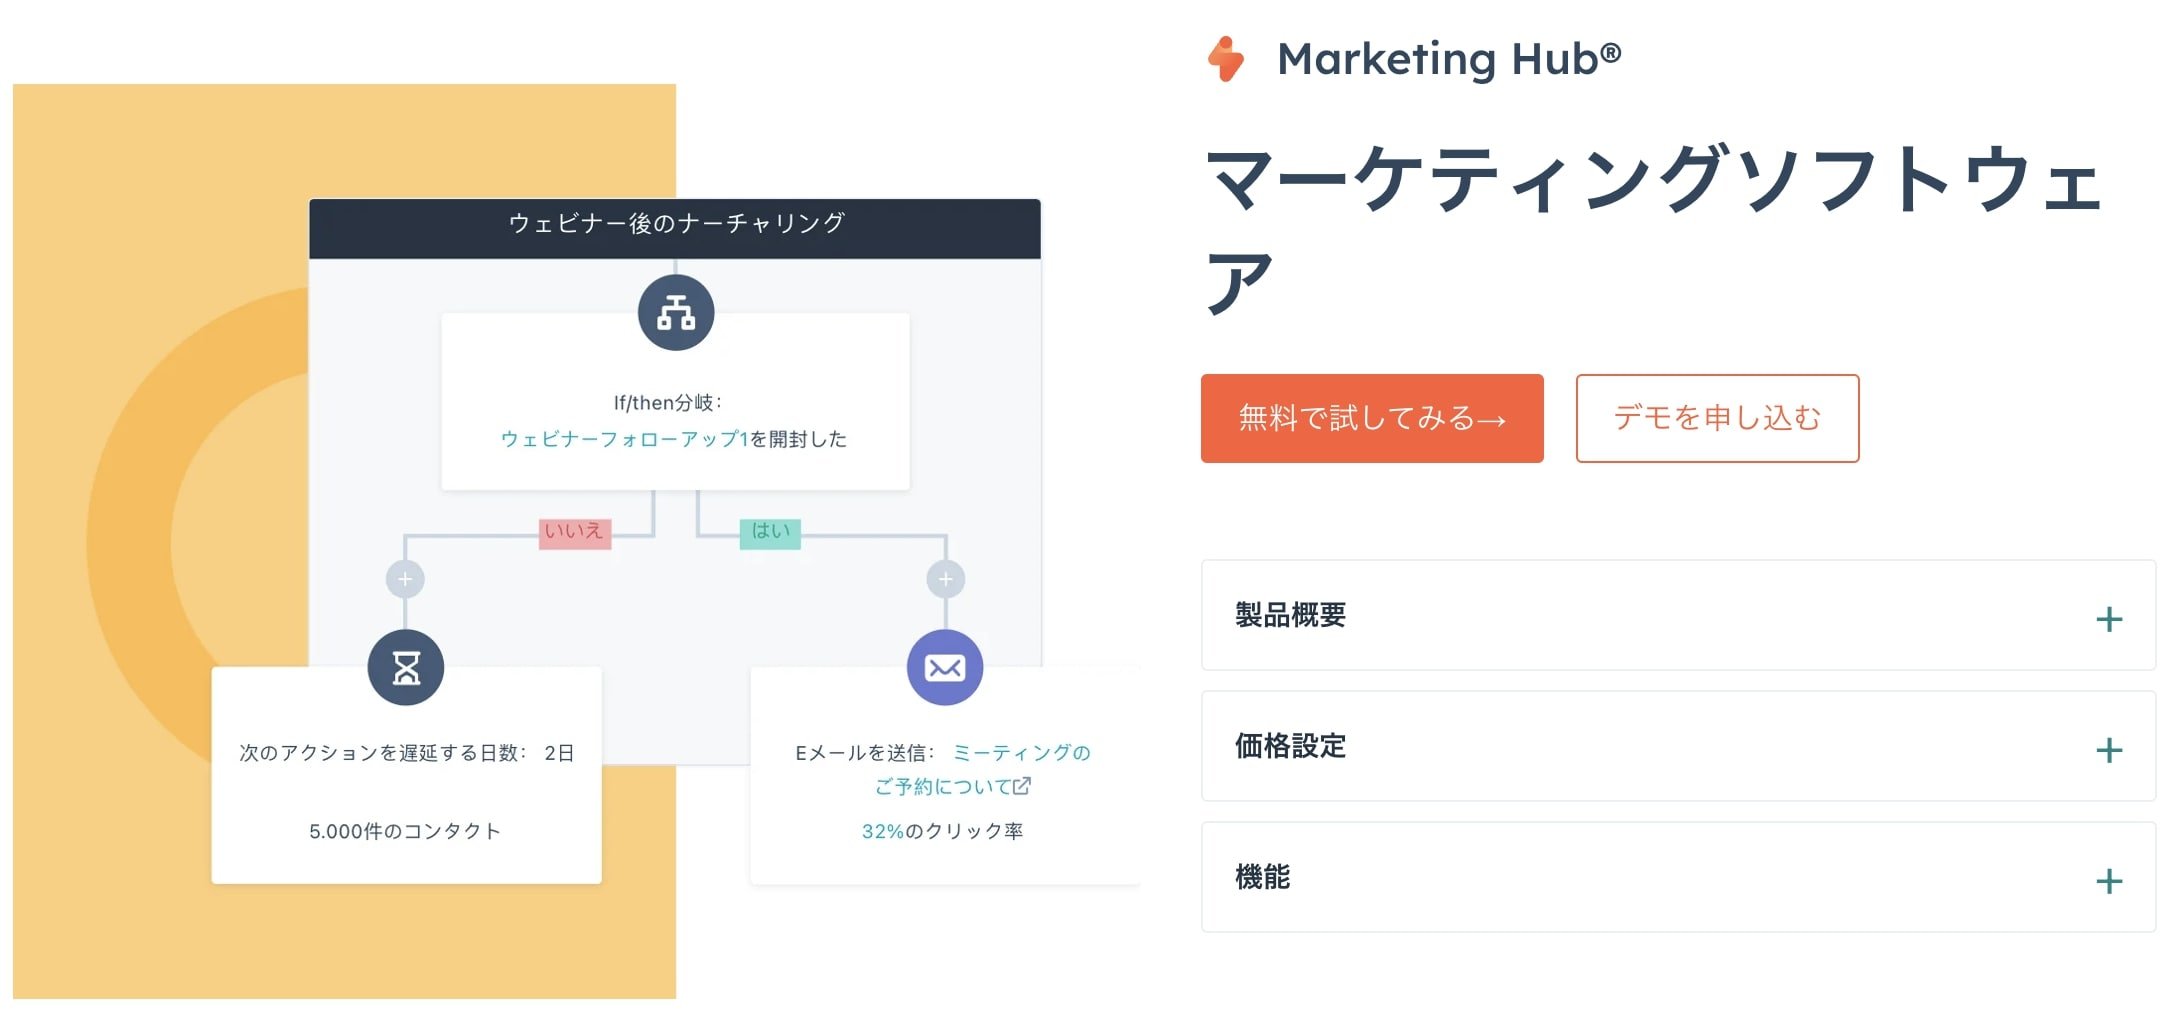 Marketing Hub公式HP